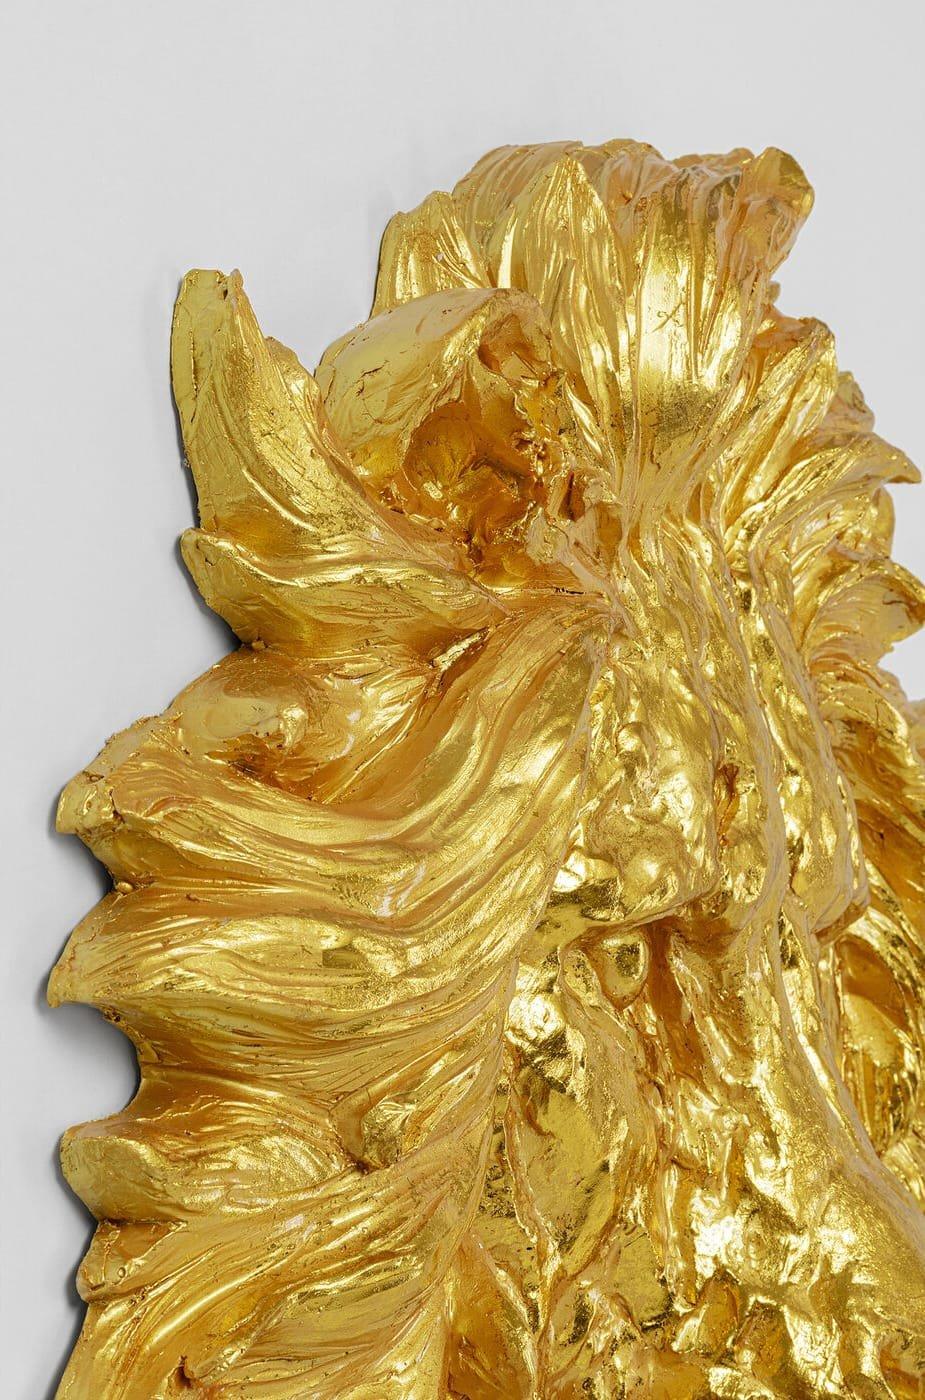 KARE Design Wandobjekt Lion Head gold 90x100  